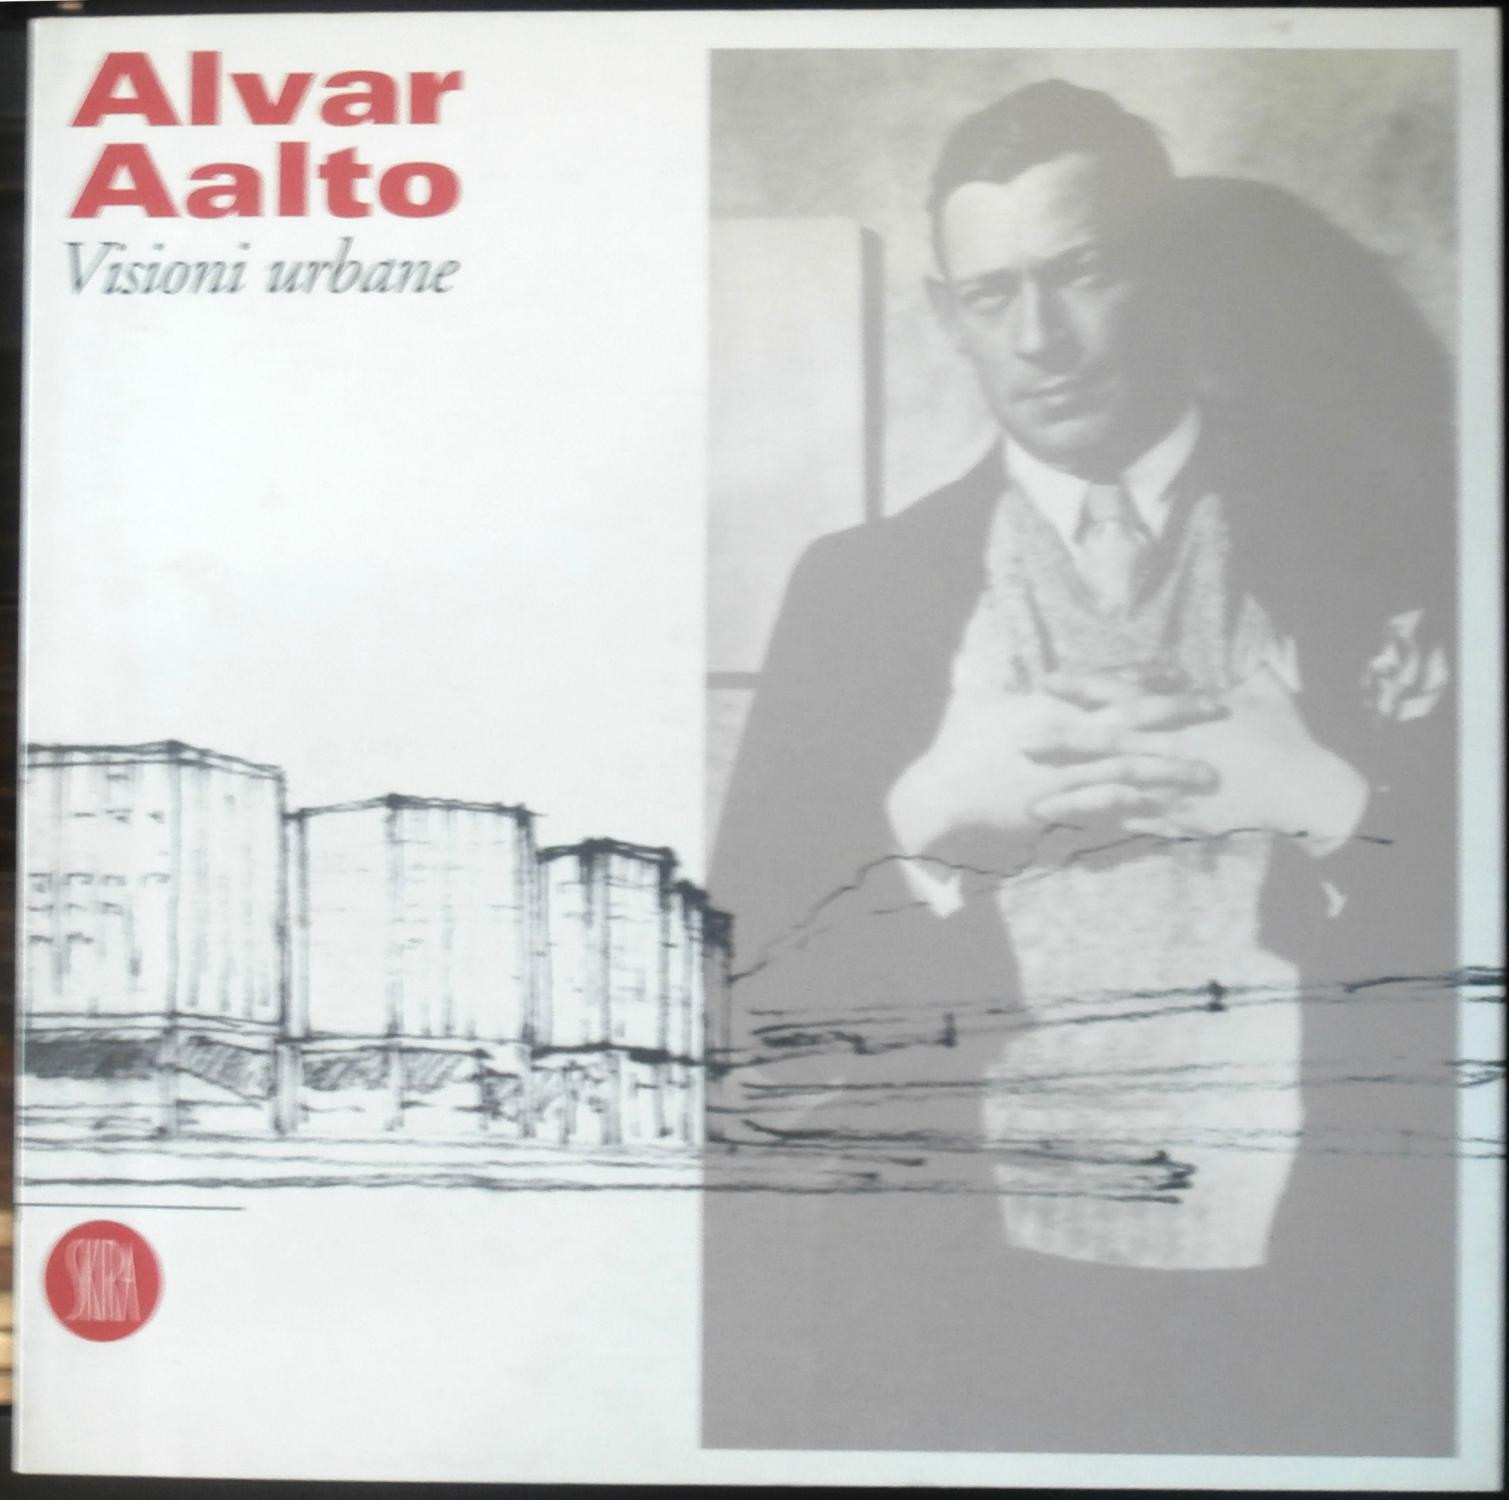 12 Lovely Alvar Aalto Vase Price 2023 free download alvar aalto vase price of alvar aalto abebooks pertaining to 22059478943